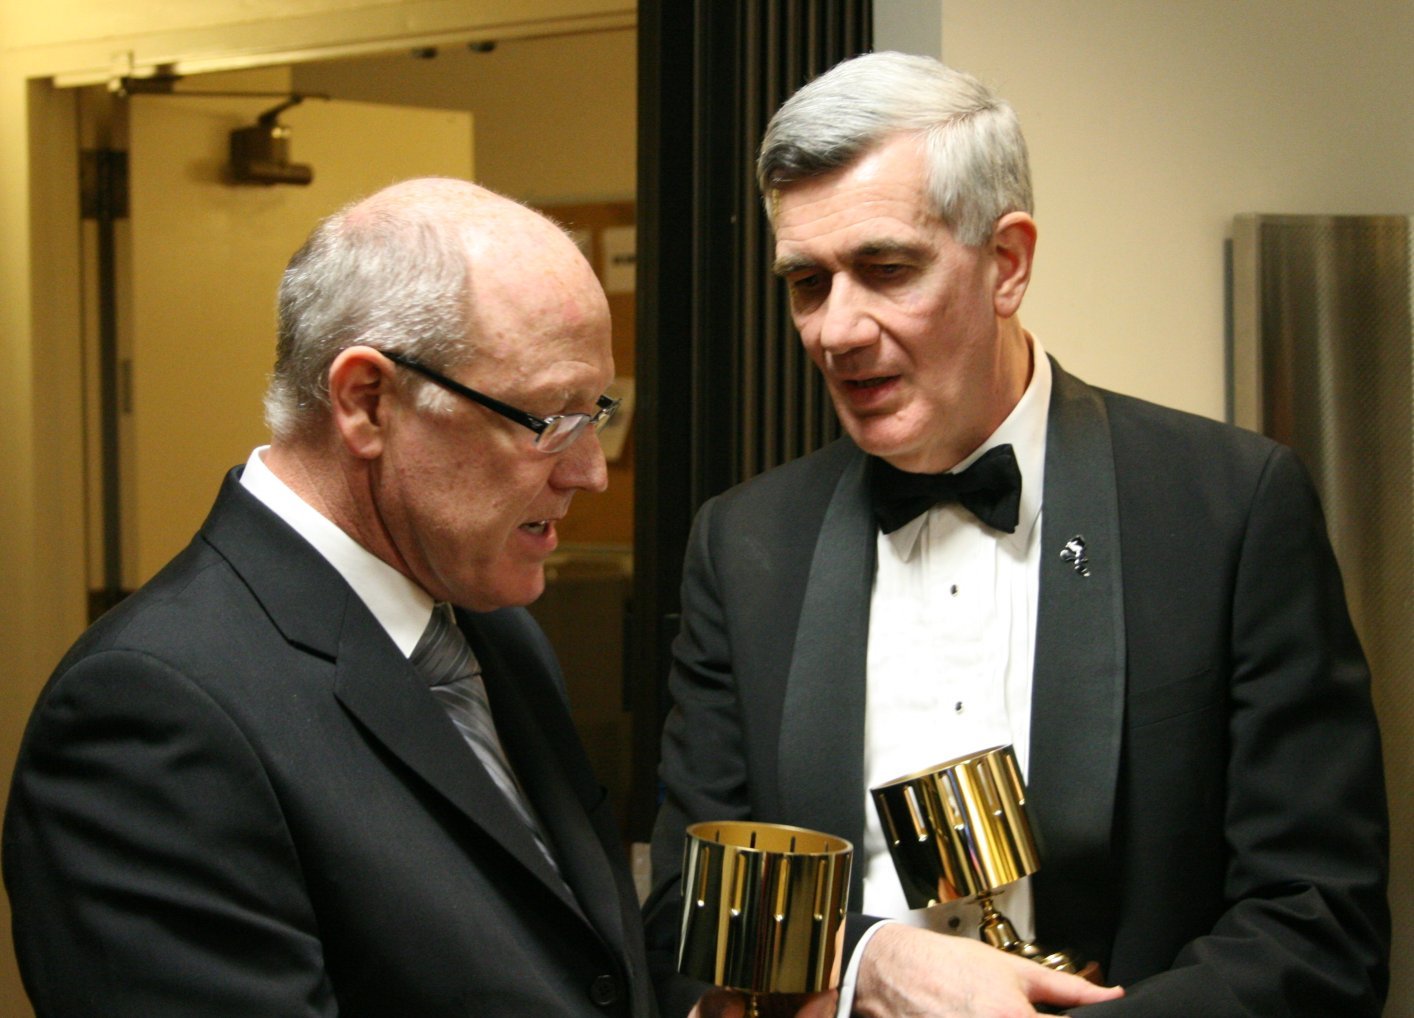 John Canemaker (r) compares notes with fellow Winsor McCay award winner Glen Keane